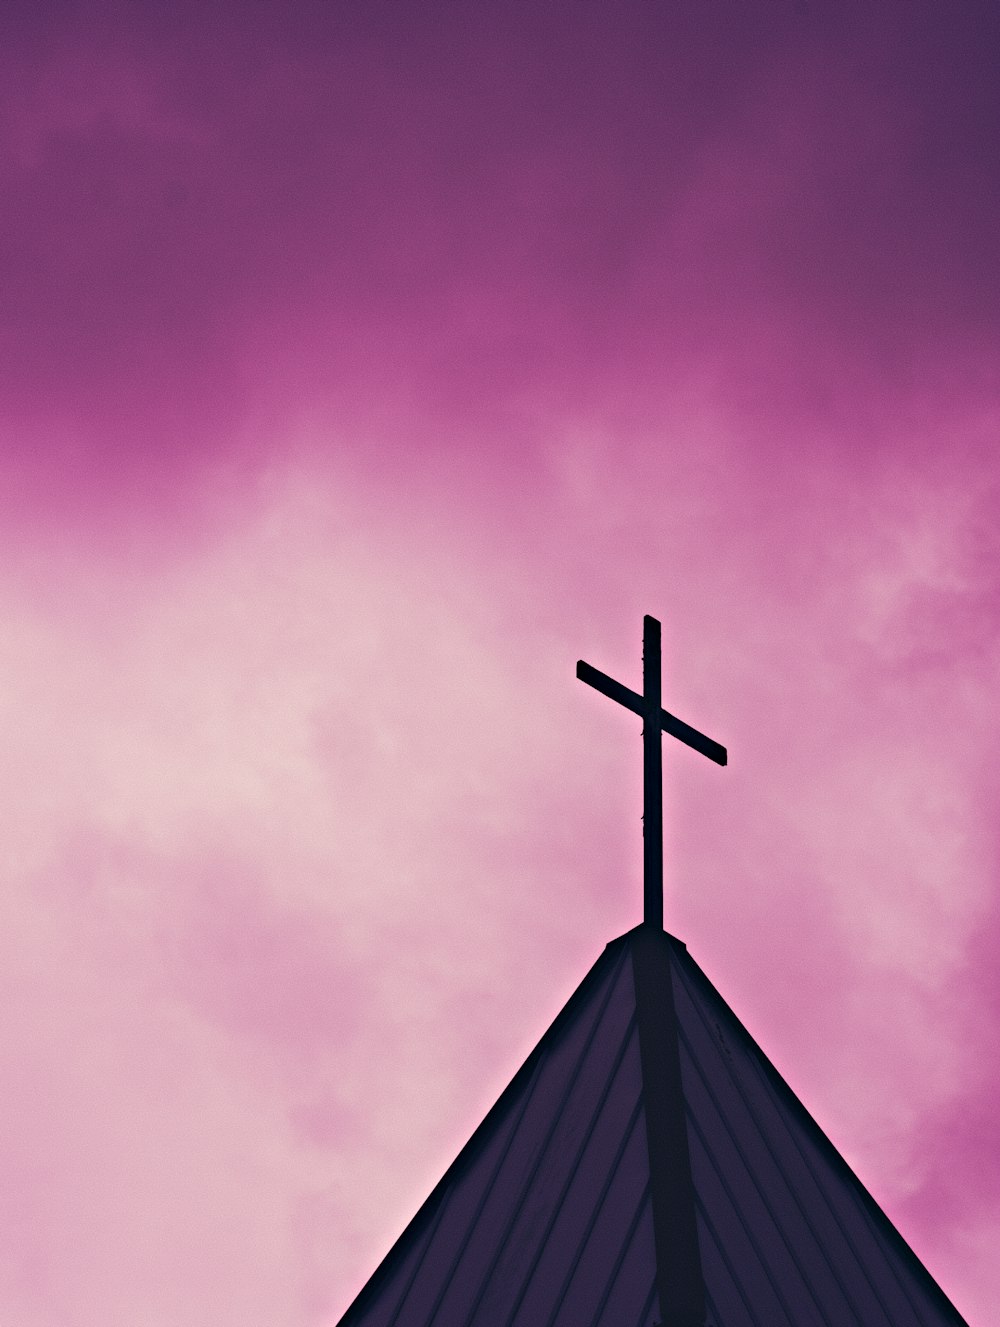 a cross on top of a church steeple against a purple sky